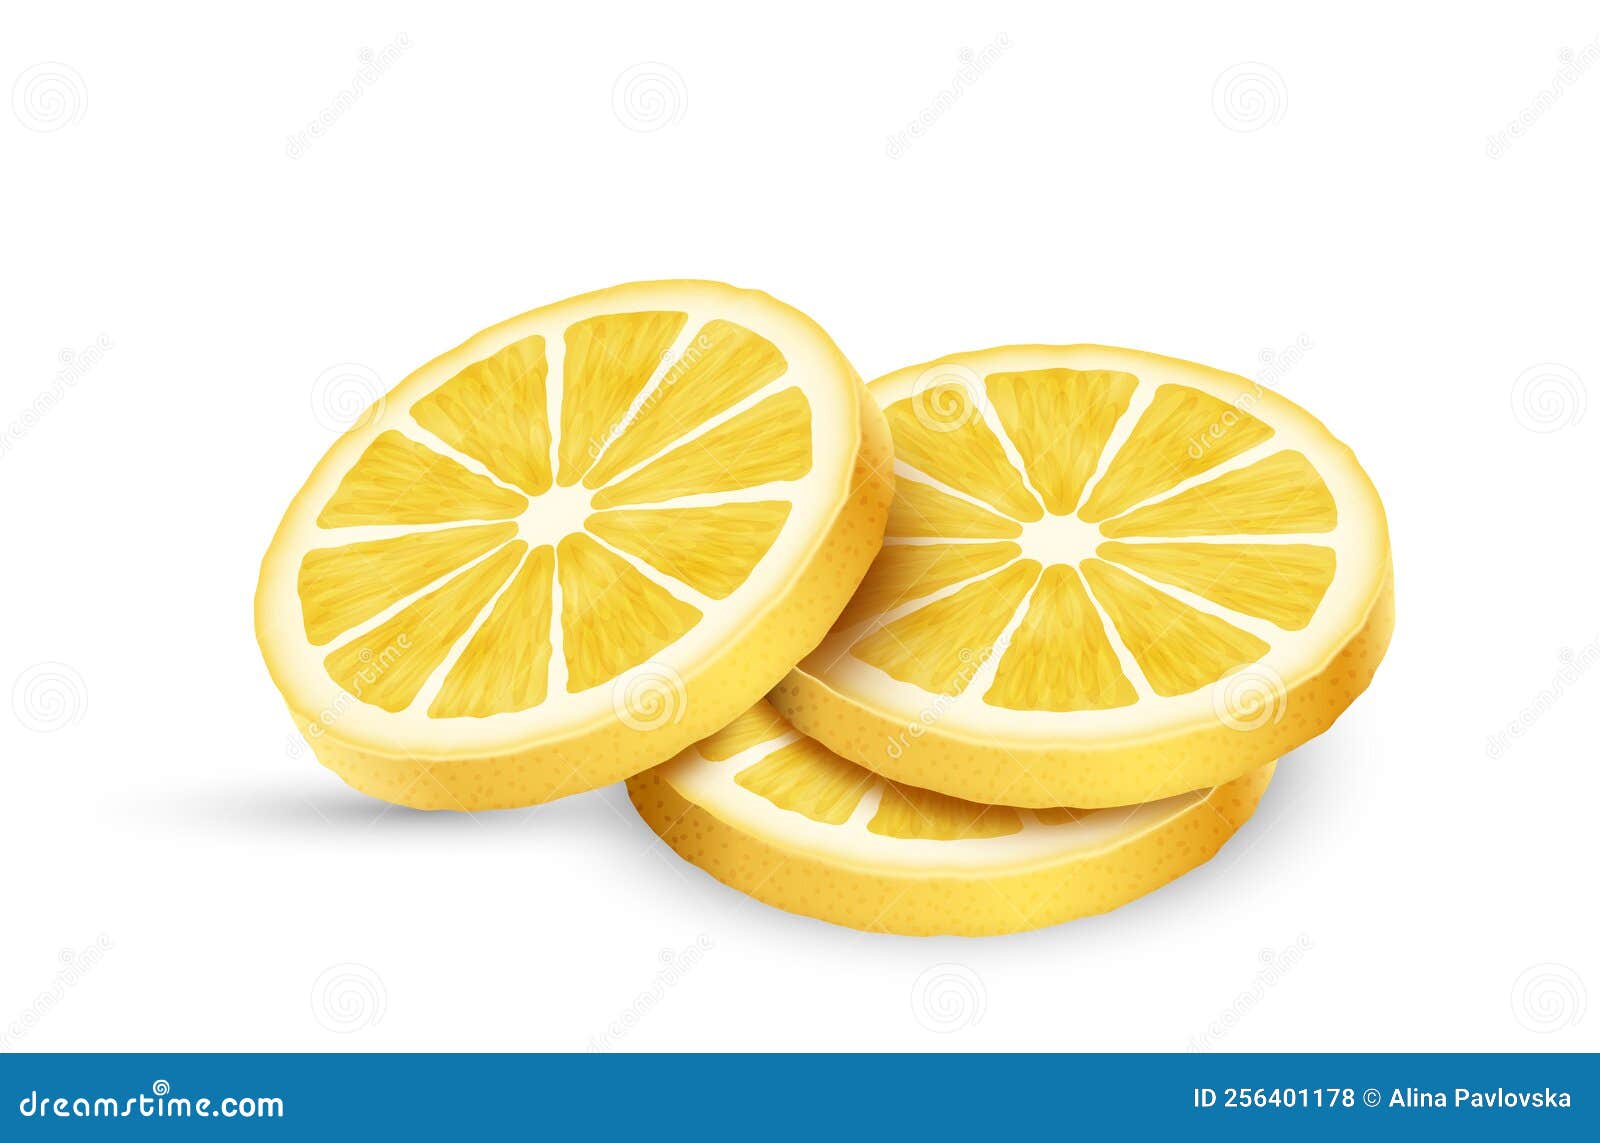 Realistic Lemon Slices Set. Sour Fresh Fruit Cut with Bright Yellow Peel.  Citrus Lemon Sliced Stock Vector - Illustration of food, icon: 256401178